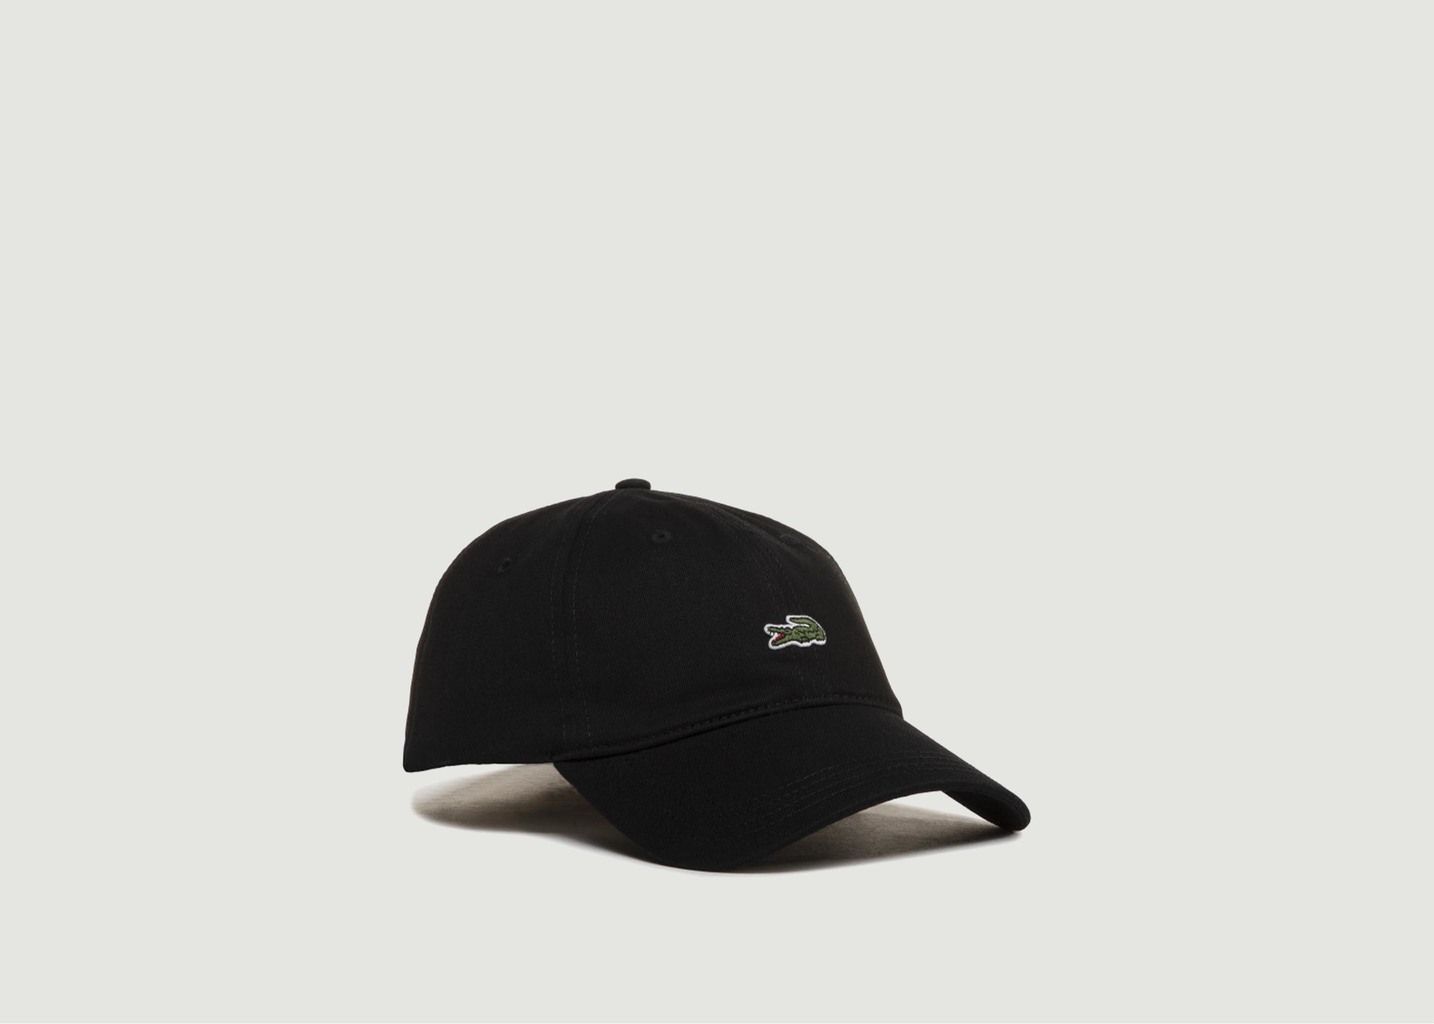 Cotton cap with logo - Lacoste